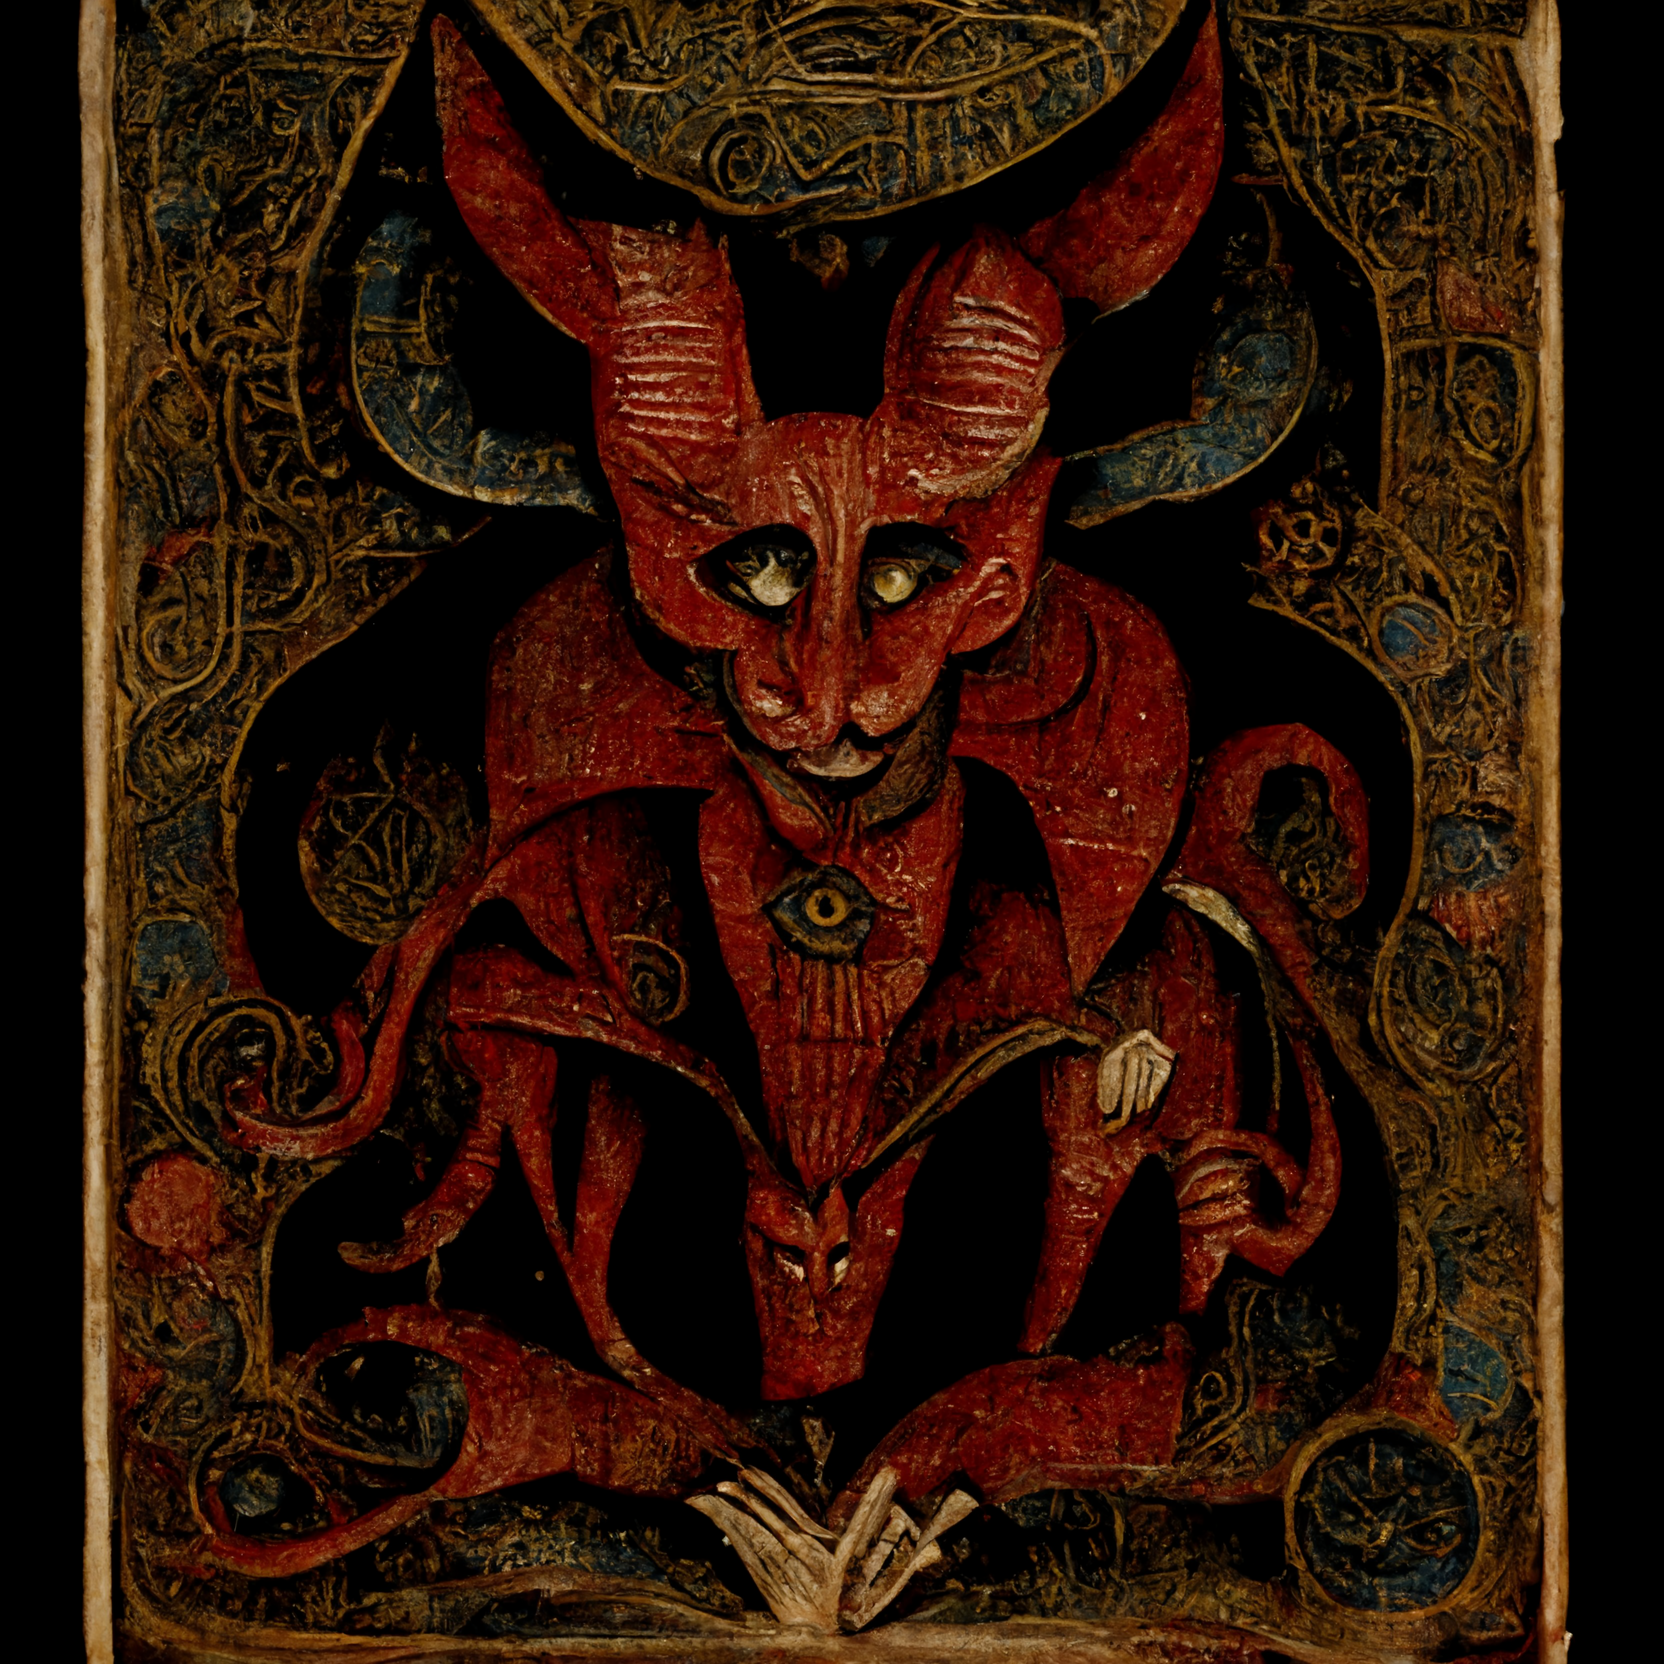 Ulysses_Black_devil_in_the_style_of_a_medieval_manuscript_faad72df-0e26-4488-86df-582e181f6b16.png